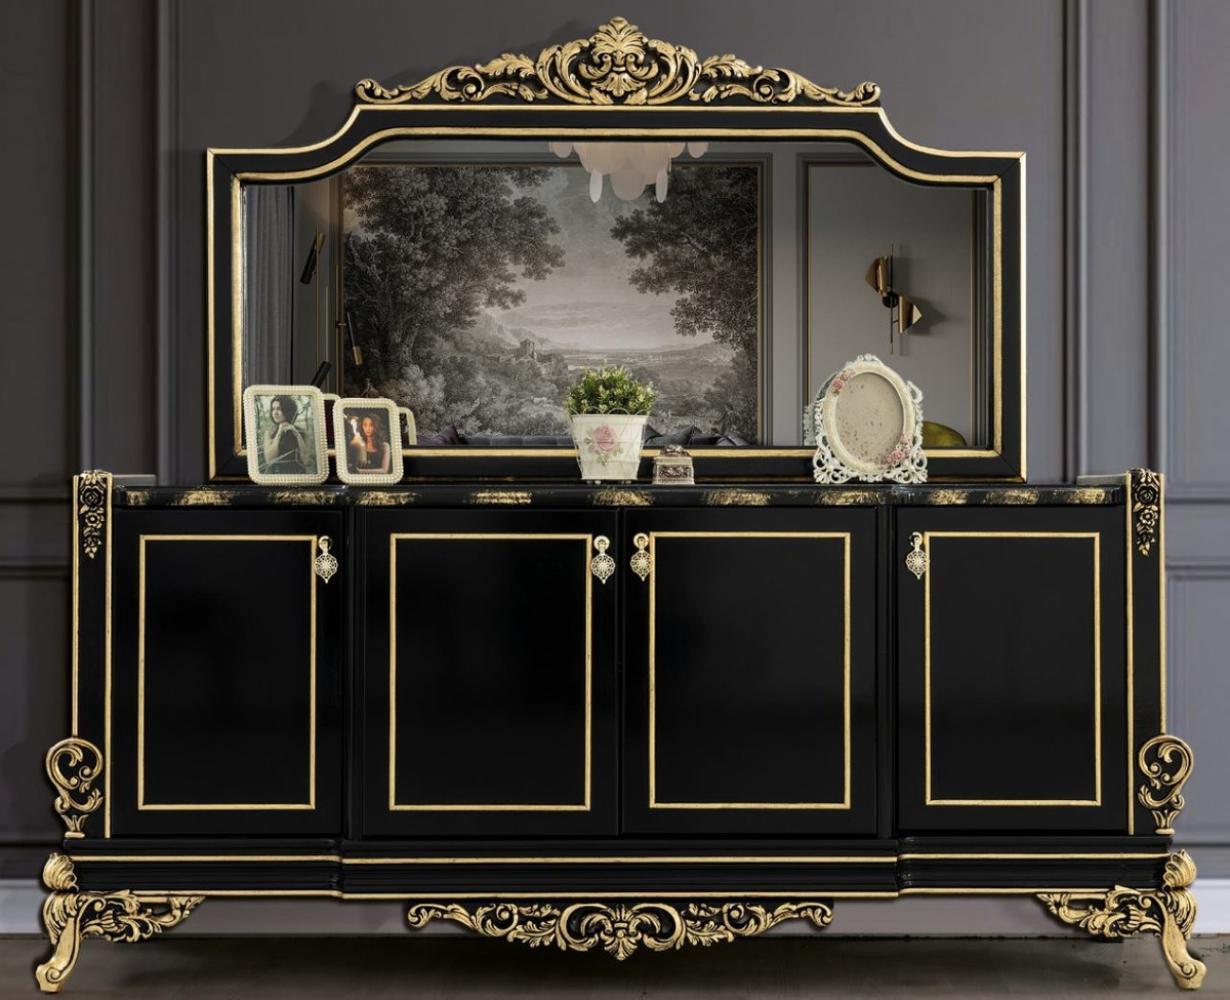 Casa Padrino Luxus Barock Möbel Set Schwarz / Gold - 1 Sideboard mit 4 Türen & 1 Spiegel - Edle Barock Möbel - Edel & Prunkvoll Bild 1